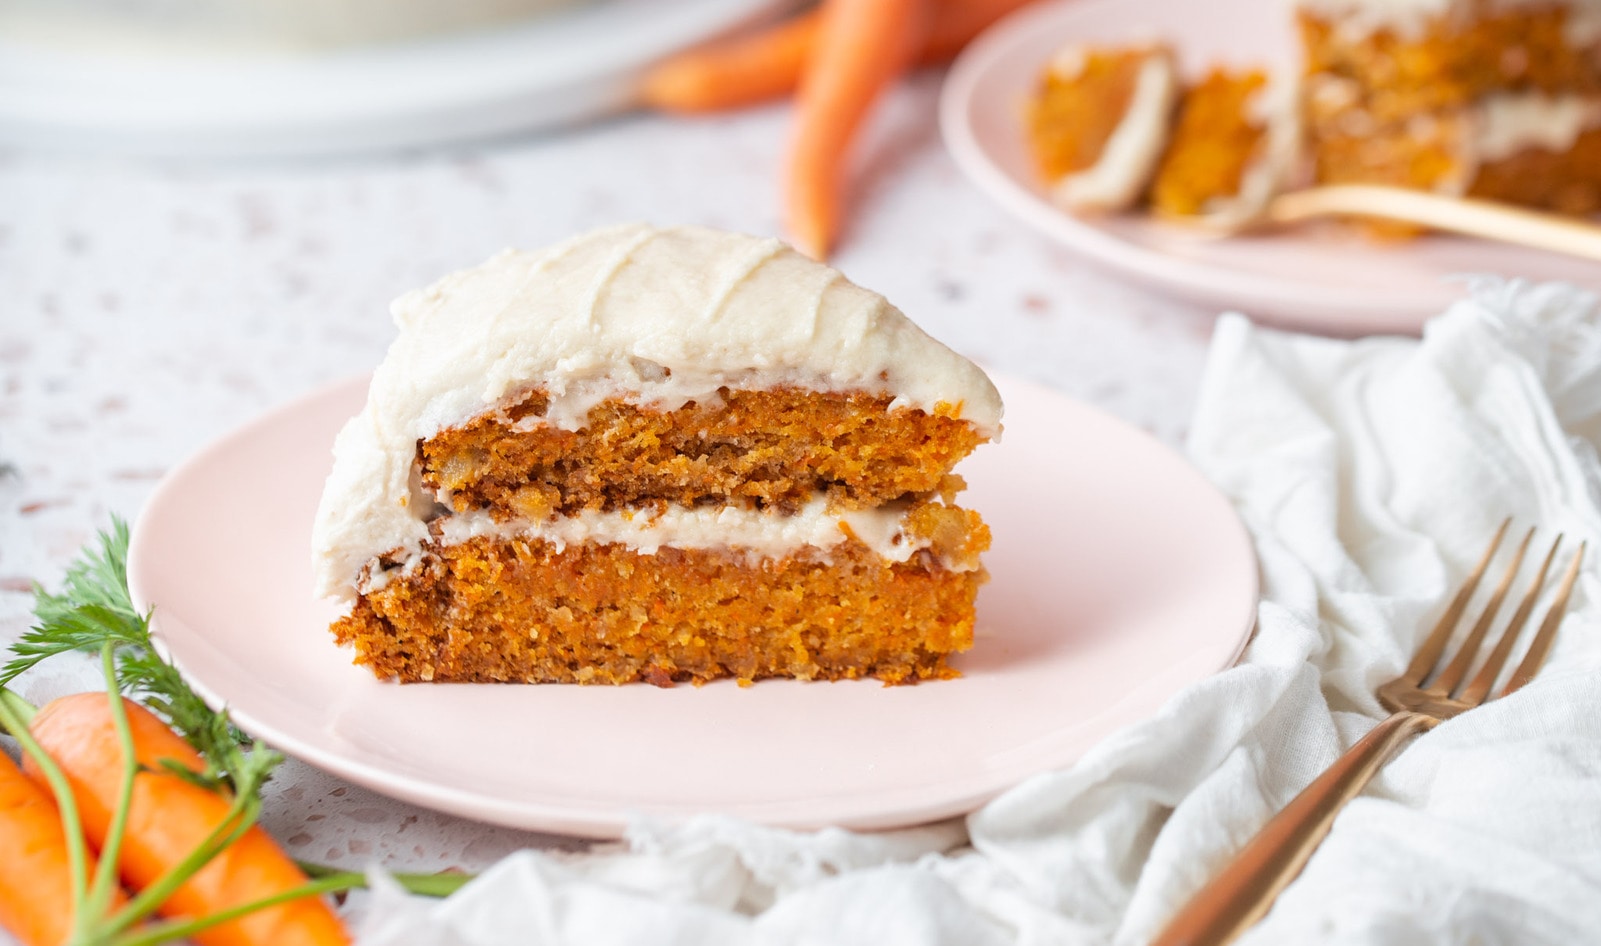 Baker Behind Award-Winning Vegan Carrot Cake Shares Her Recipe After 15 Years With VegNews Readers